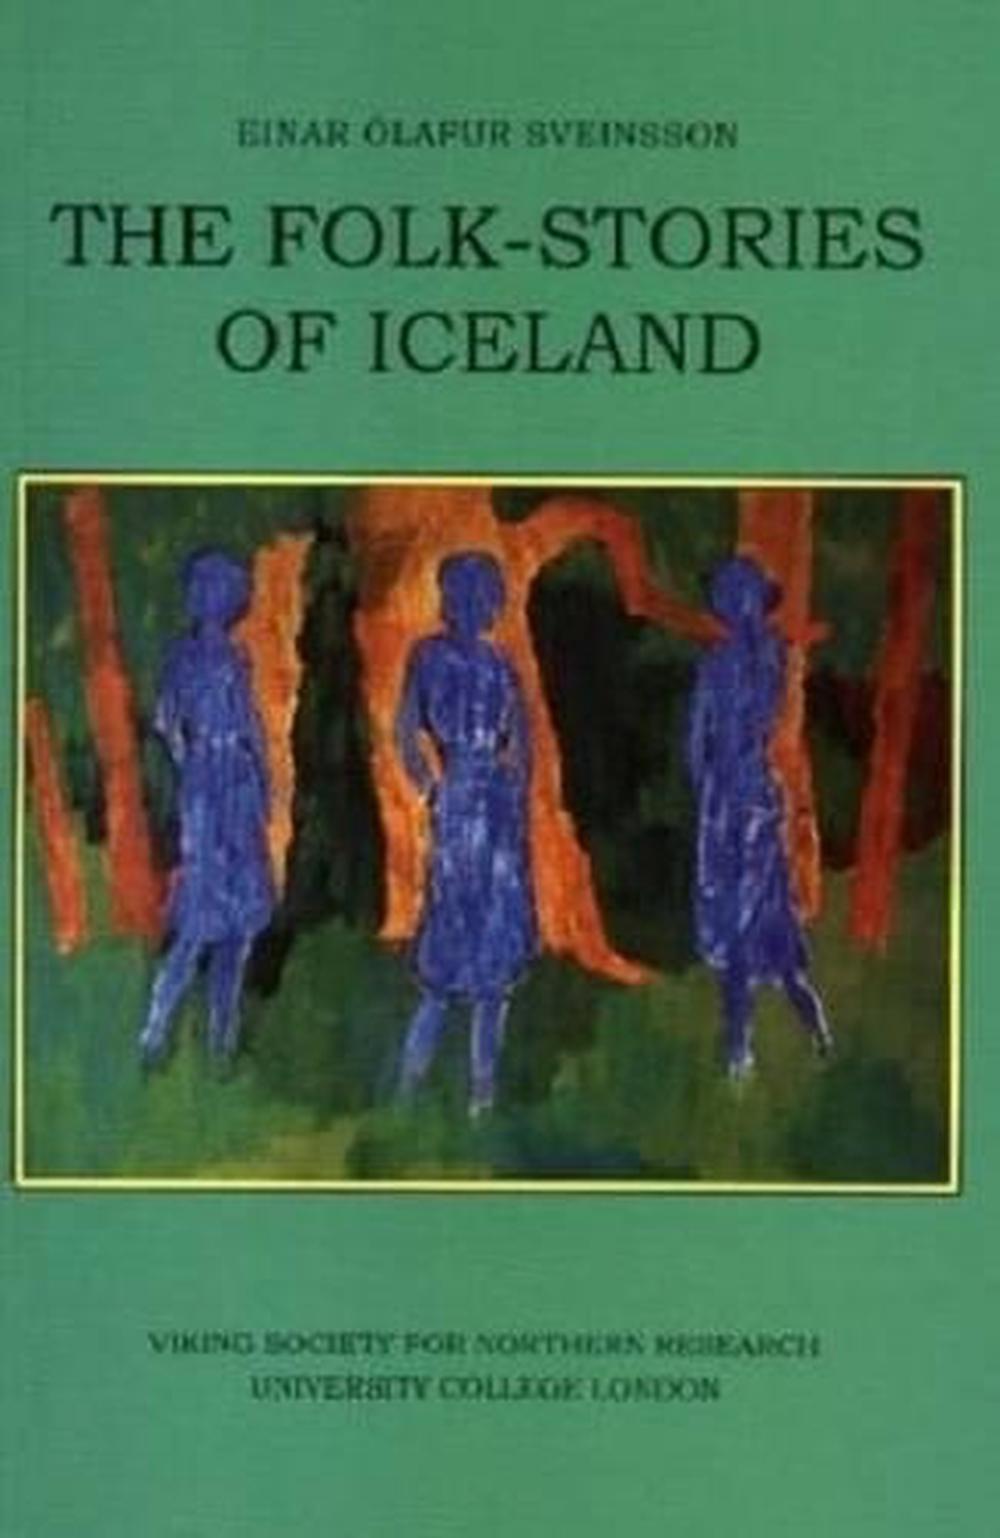 Folk-stories of Iceland by Einar Olafur Sveinsson Paperback Book Free ...